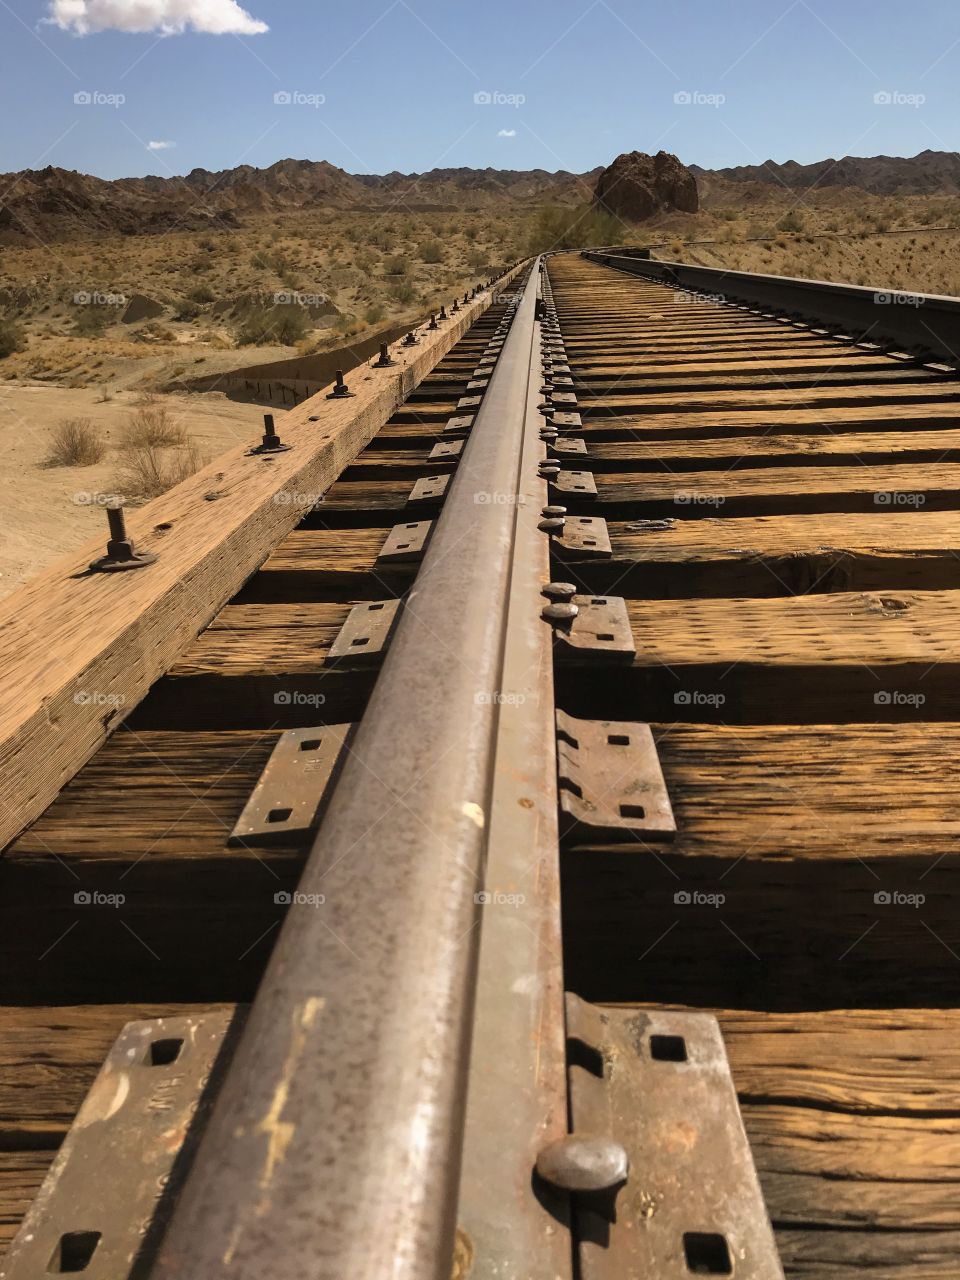 Abandoned railway in the desert